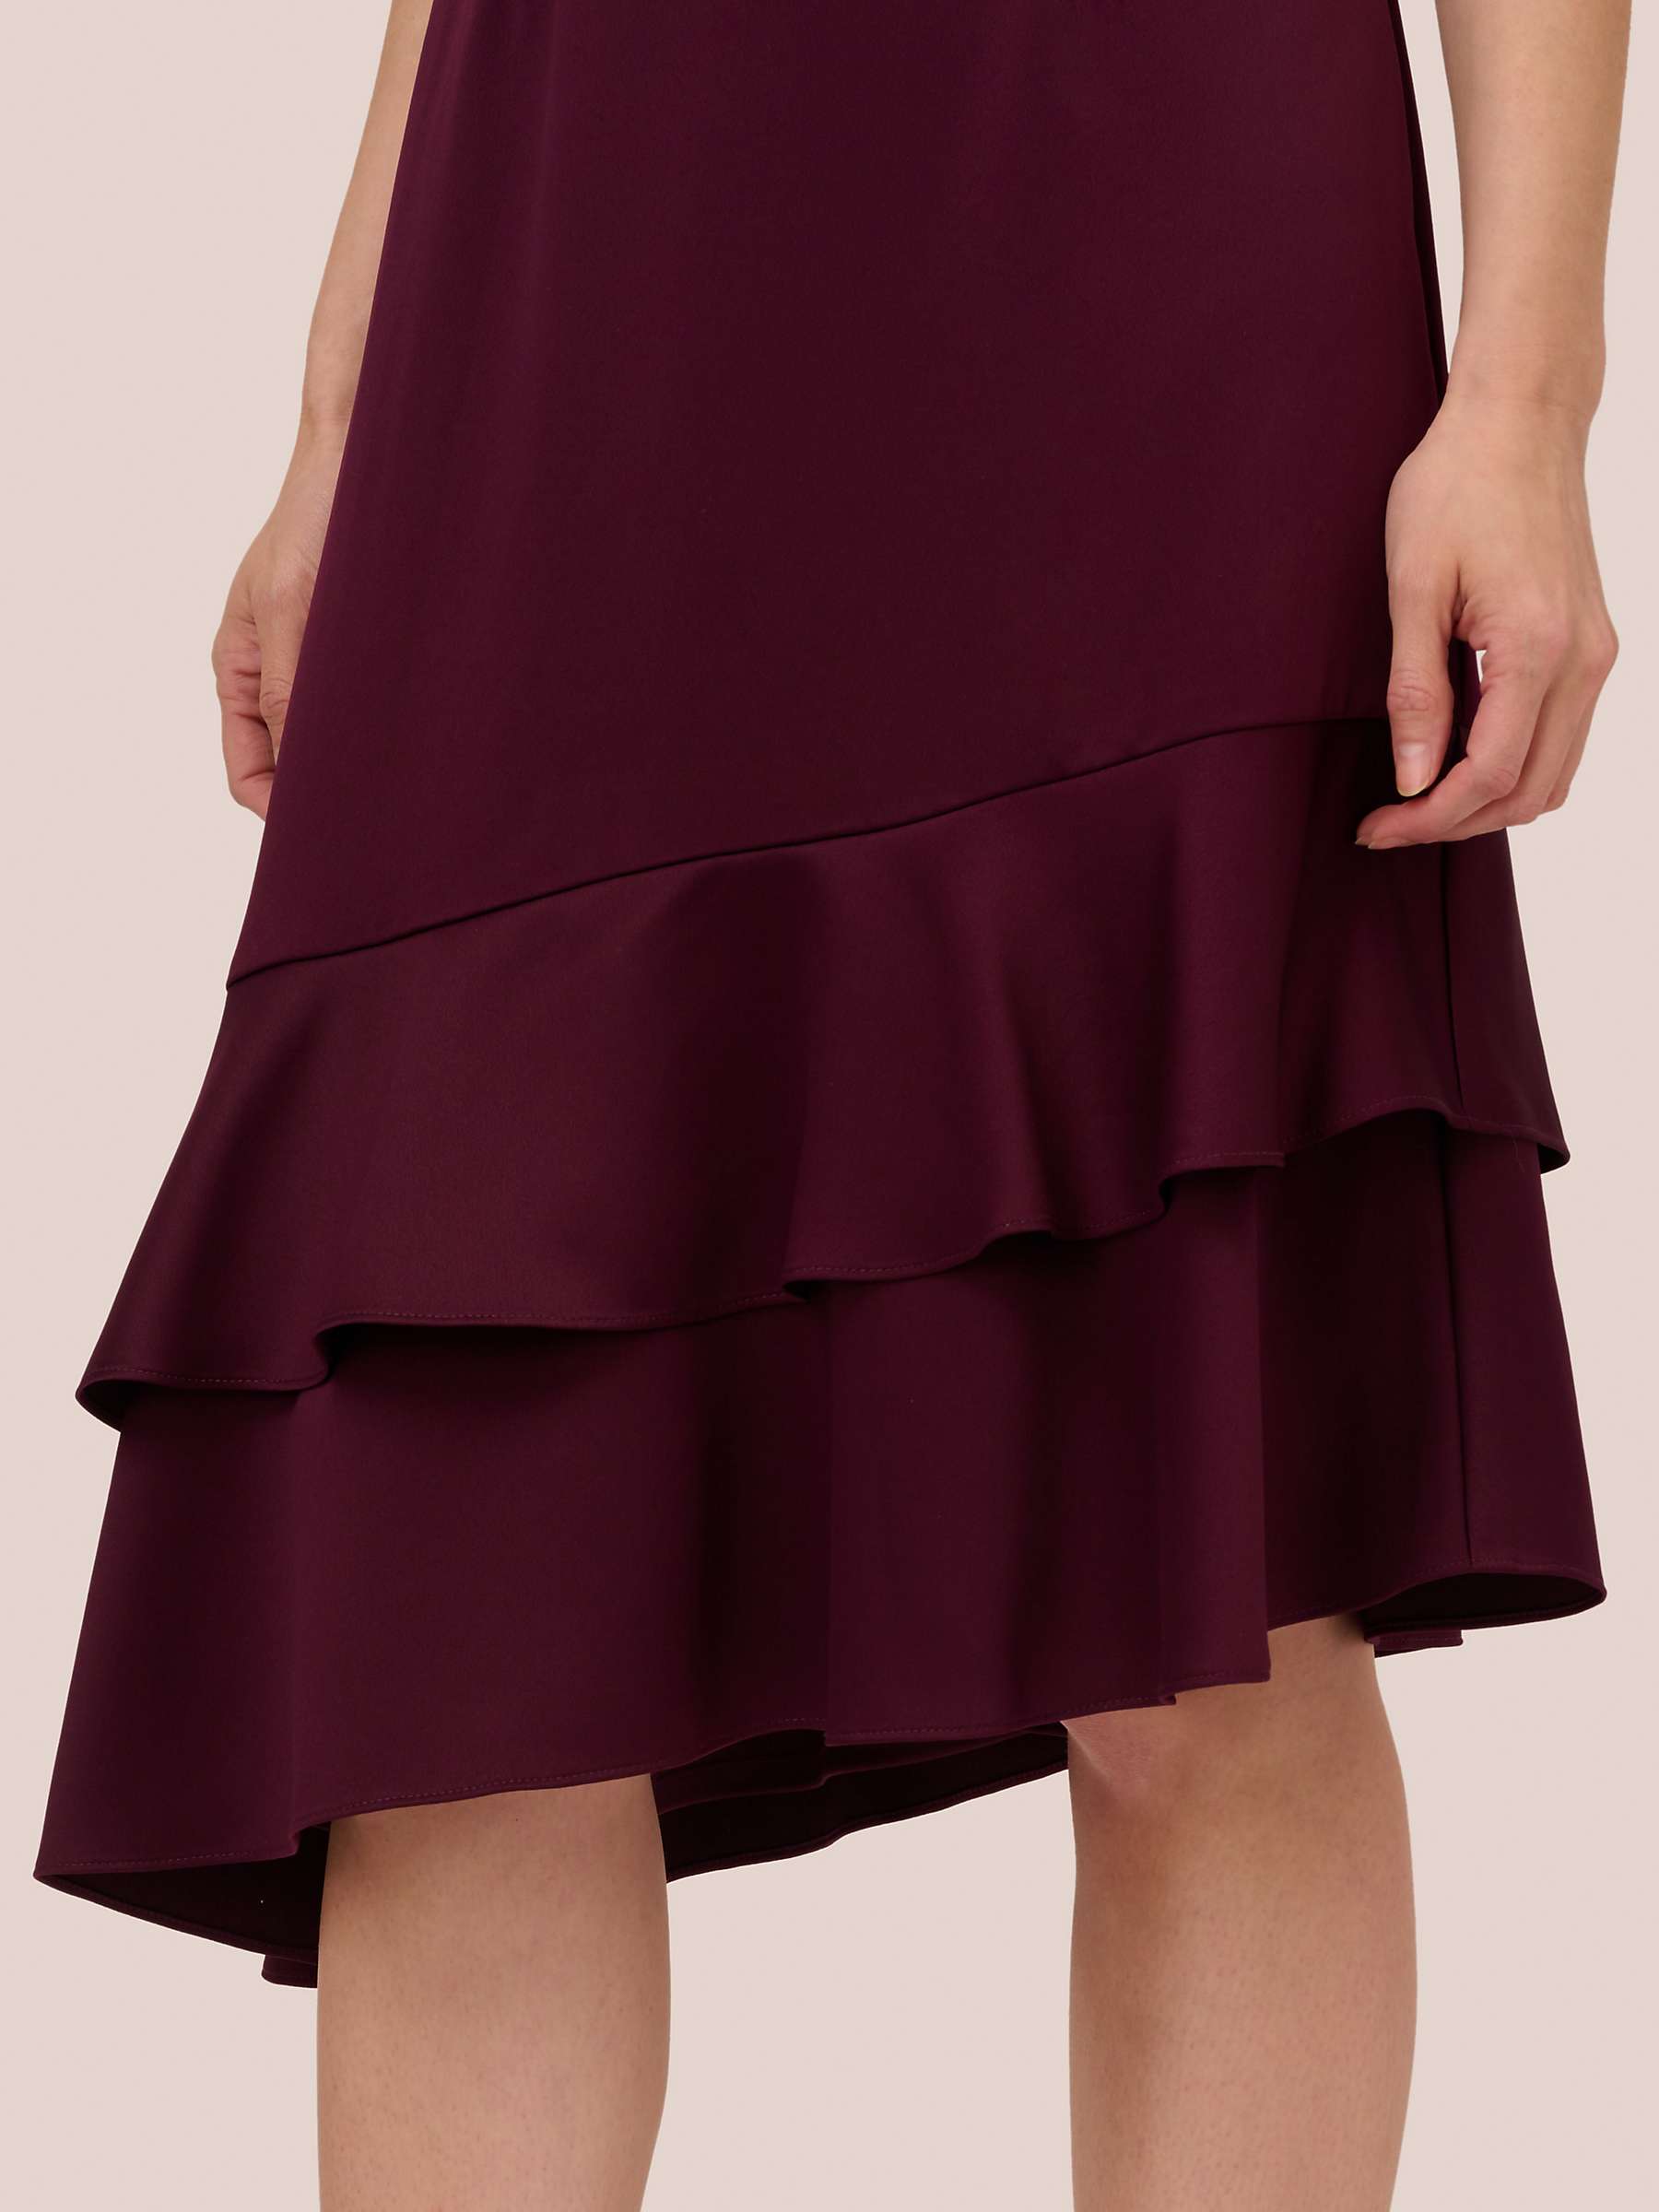 Buy Adrianna Papell Satin Crepe Halterneck Dress, Bordeaux Glow Online at johnlewis.com